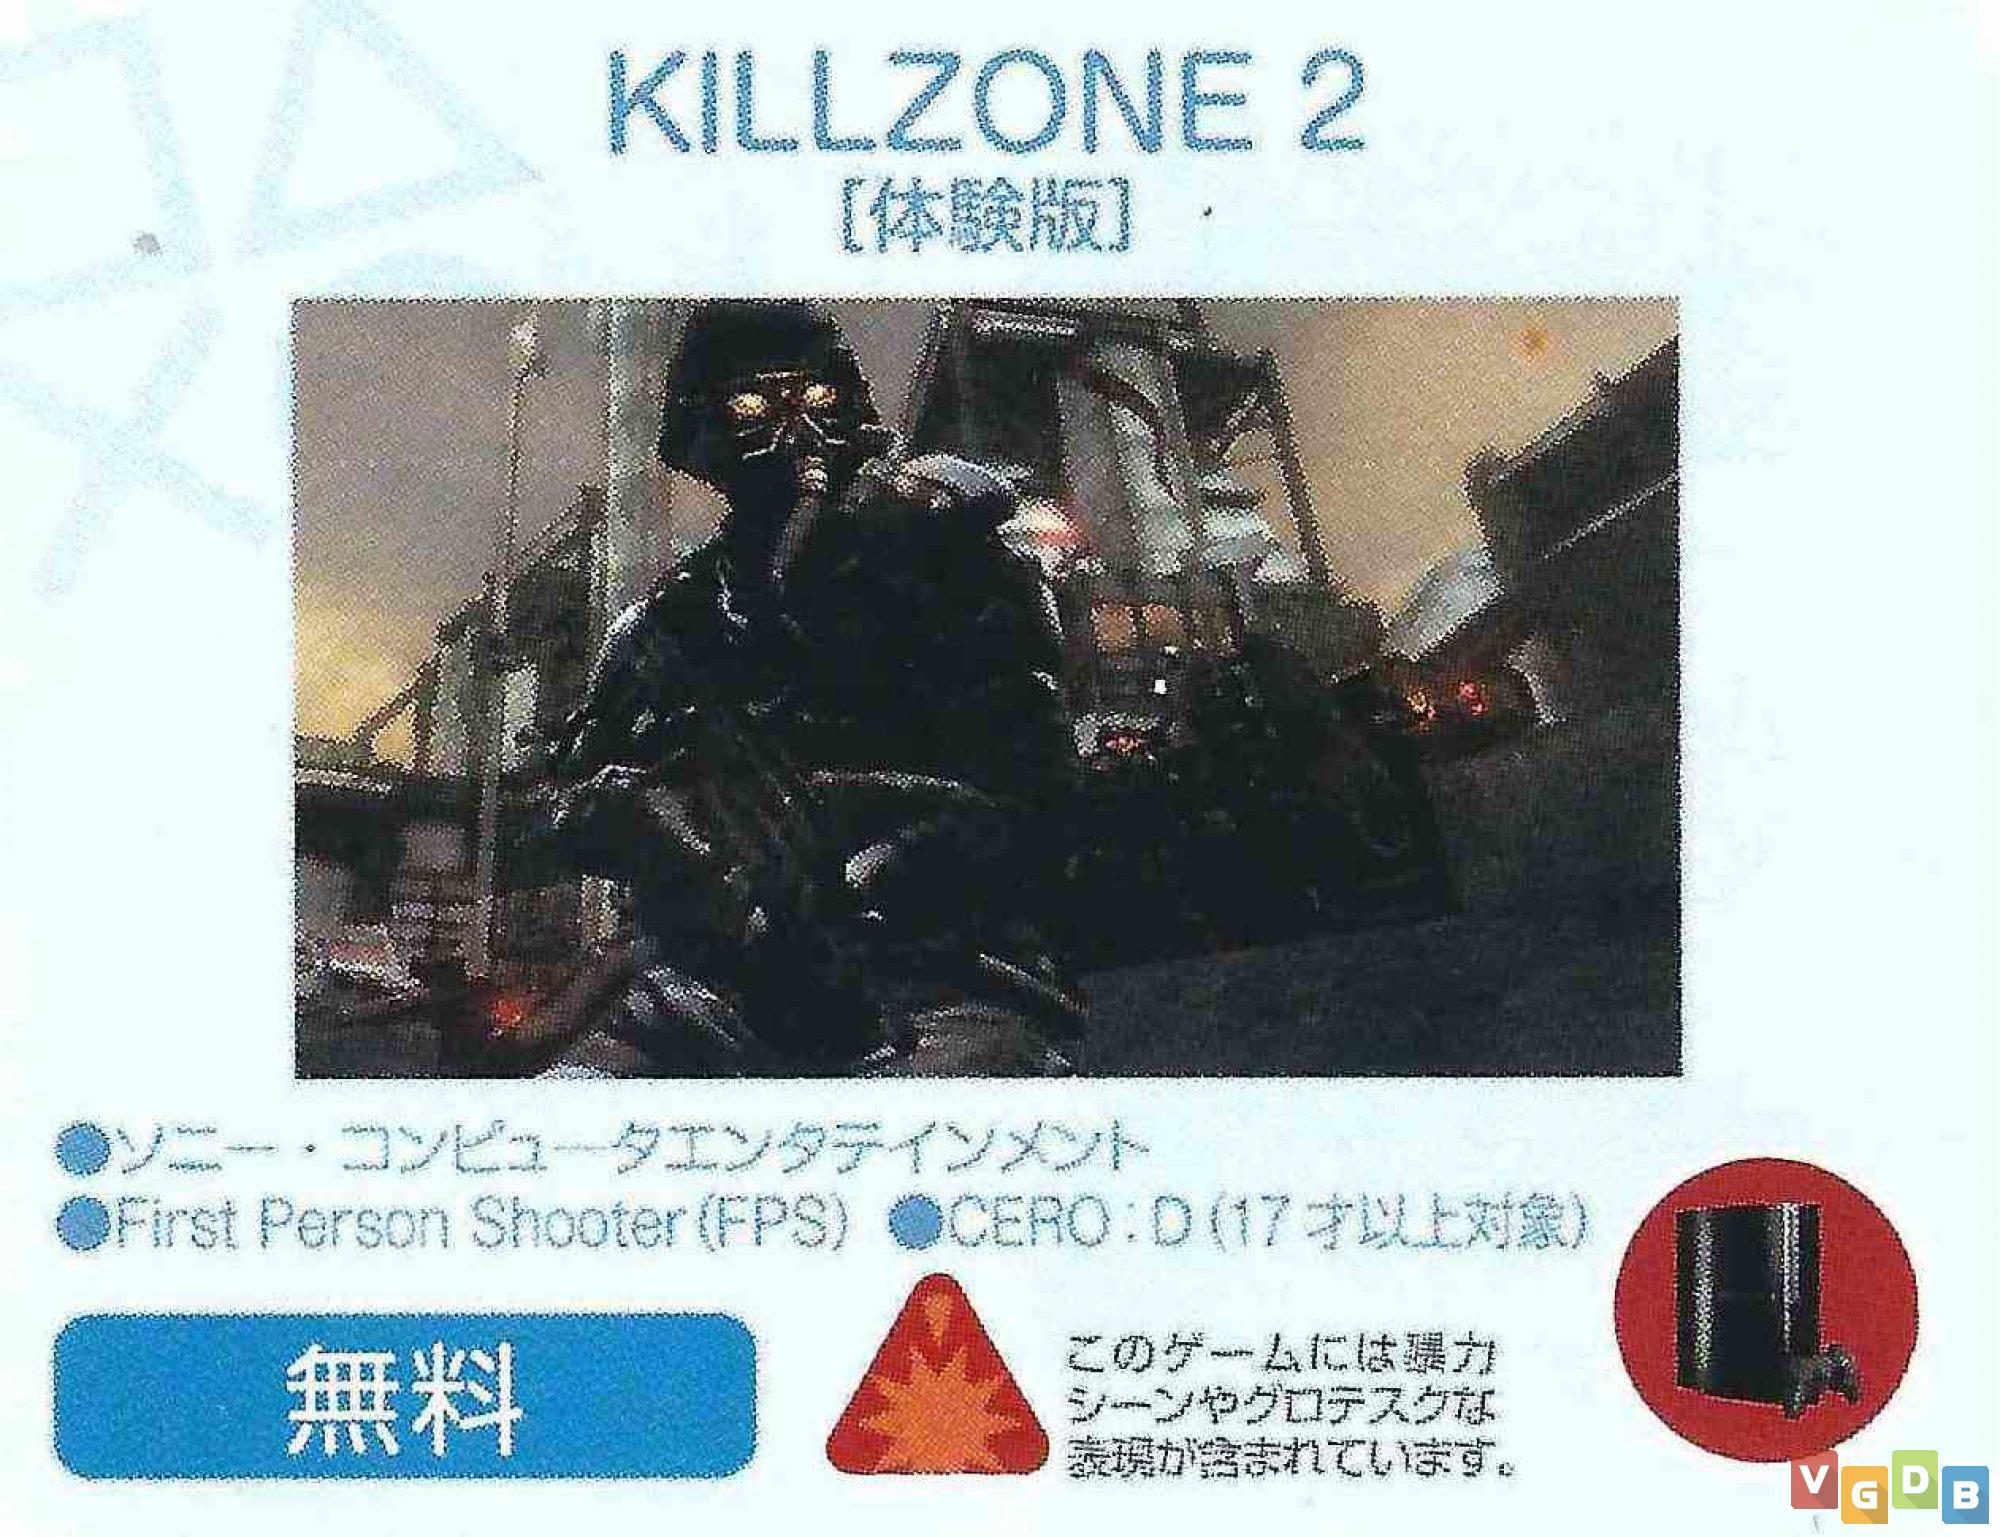 Killzone 3 - VGDB - Vídeo Game Data Base